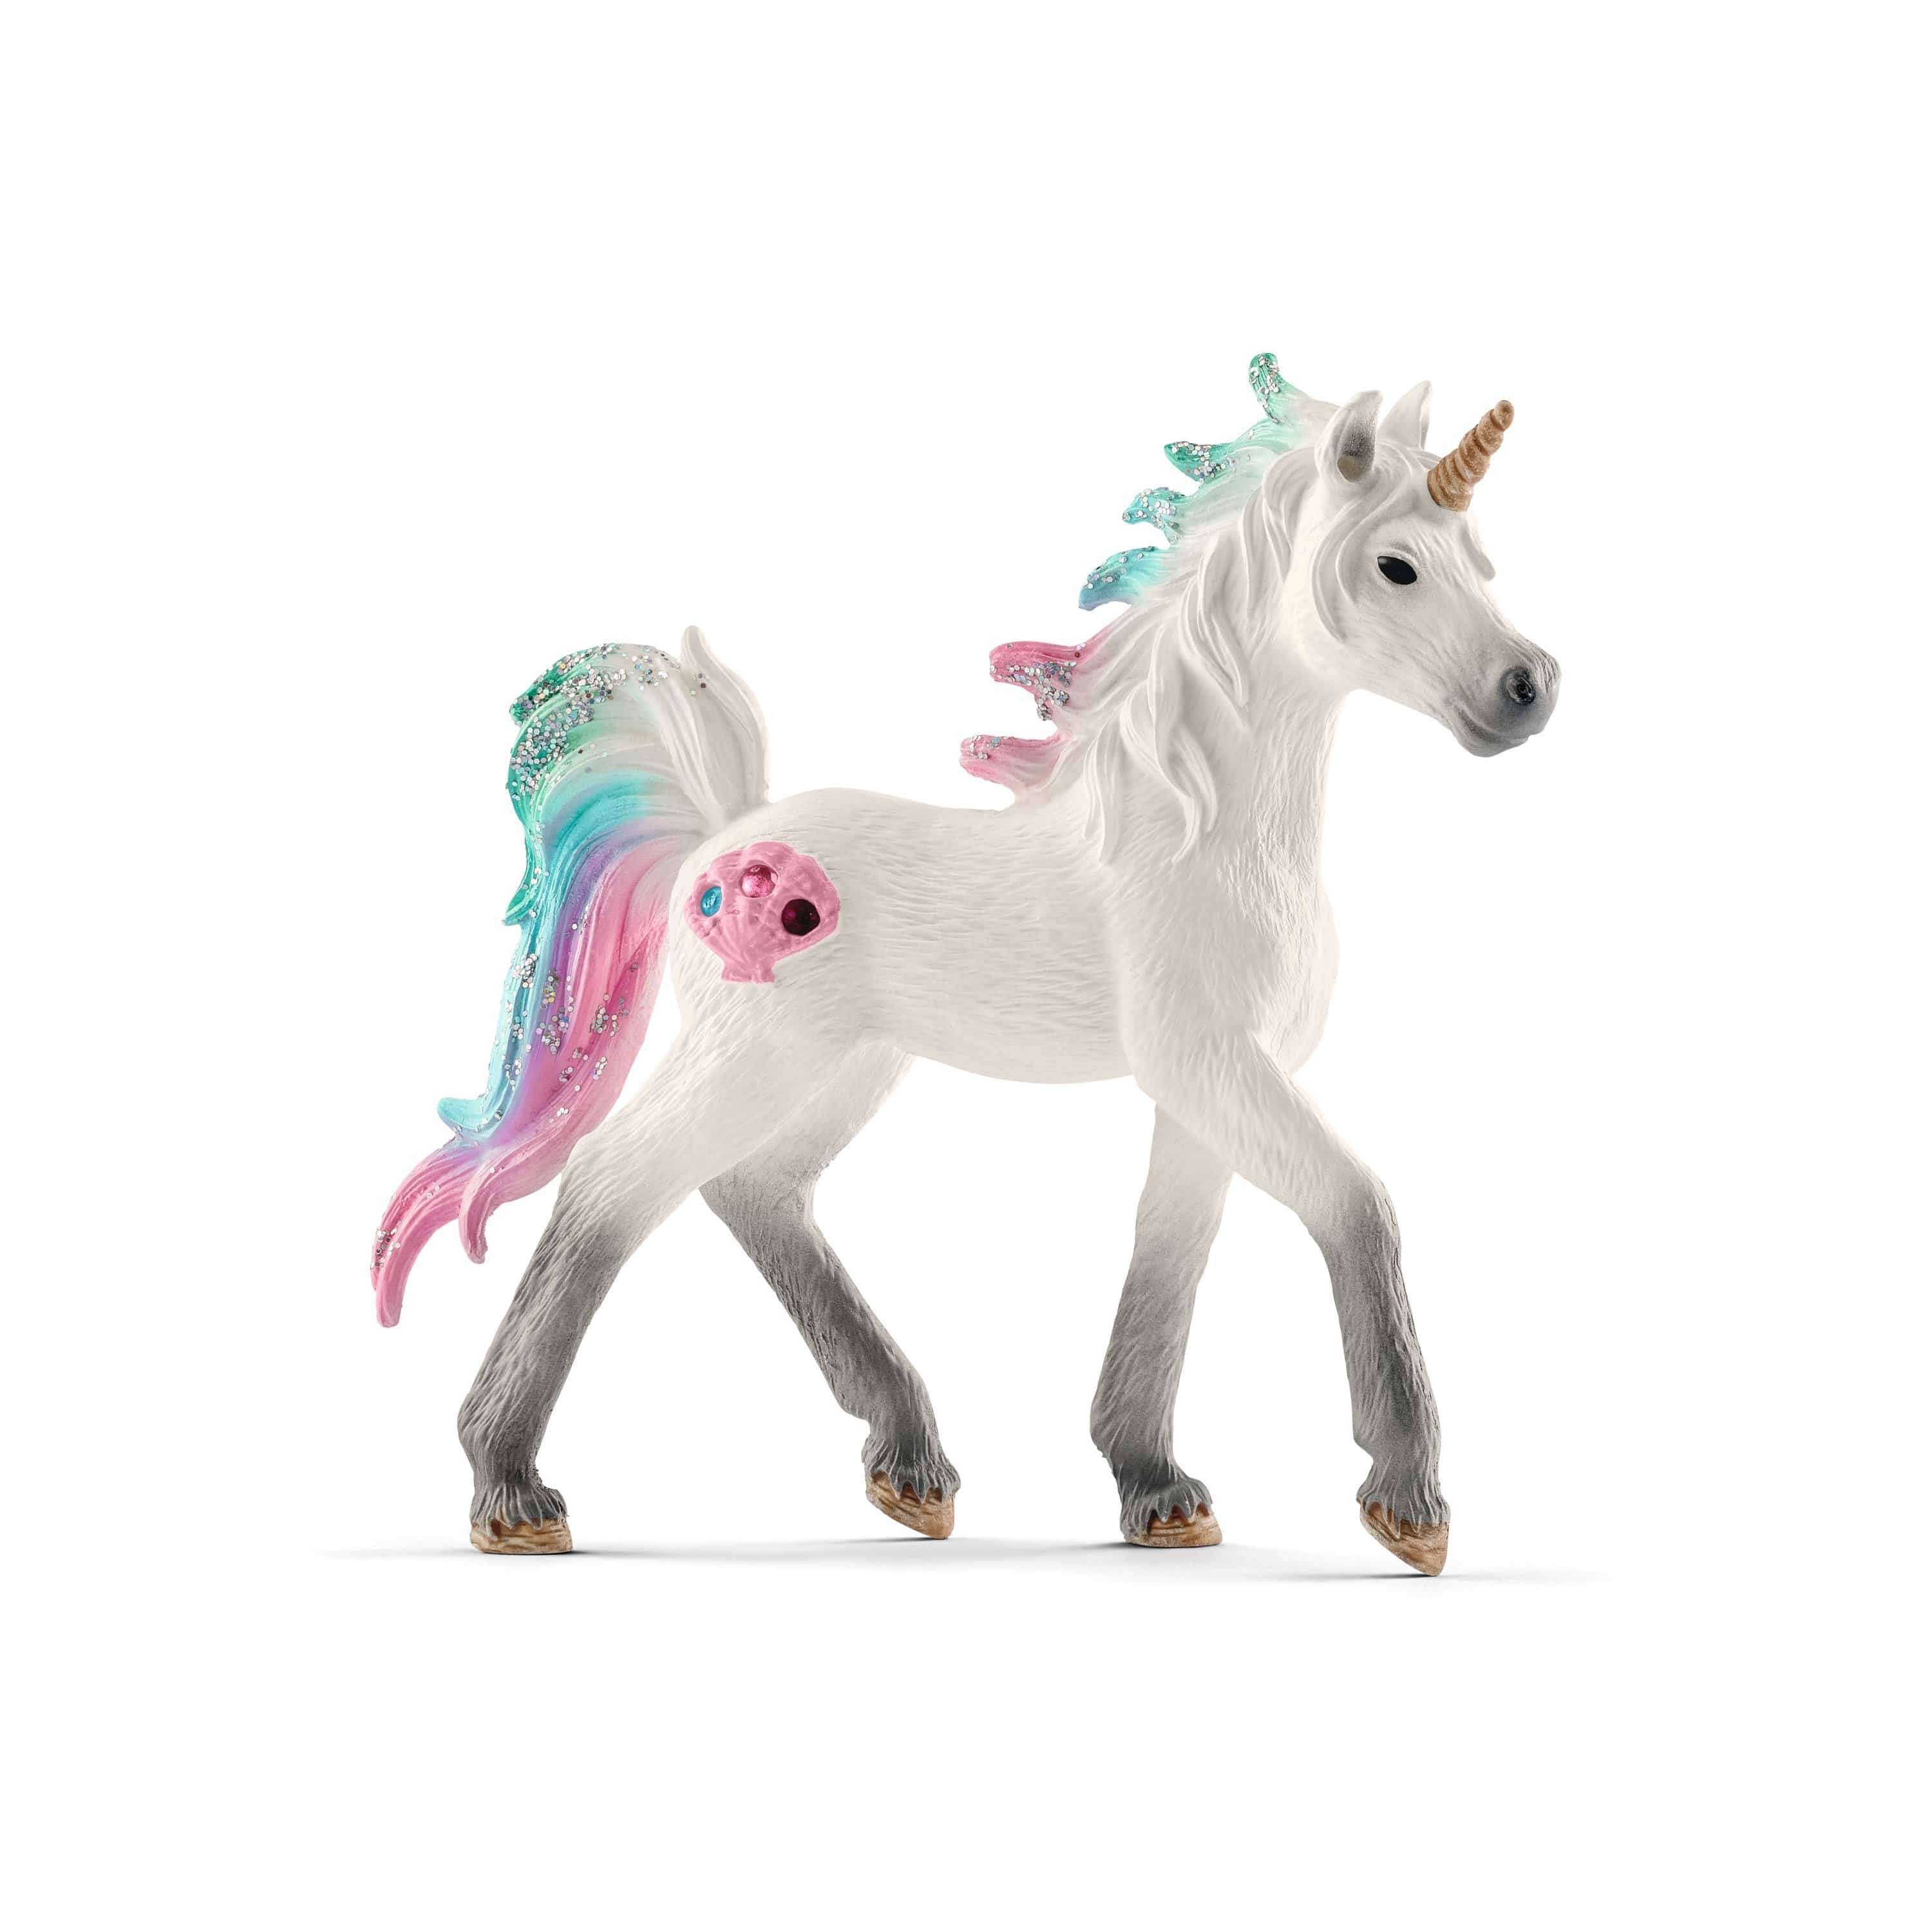 Schleich Sea Unicorn Toy Figurine - Foal